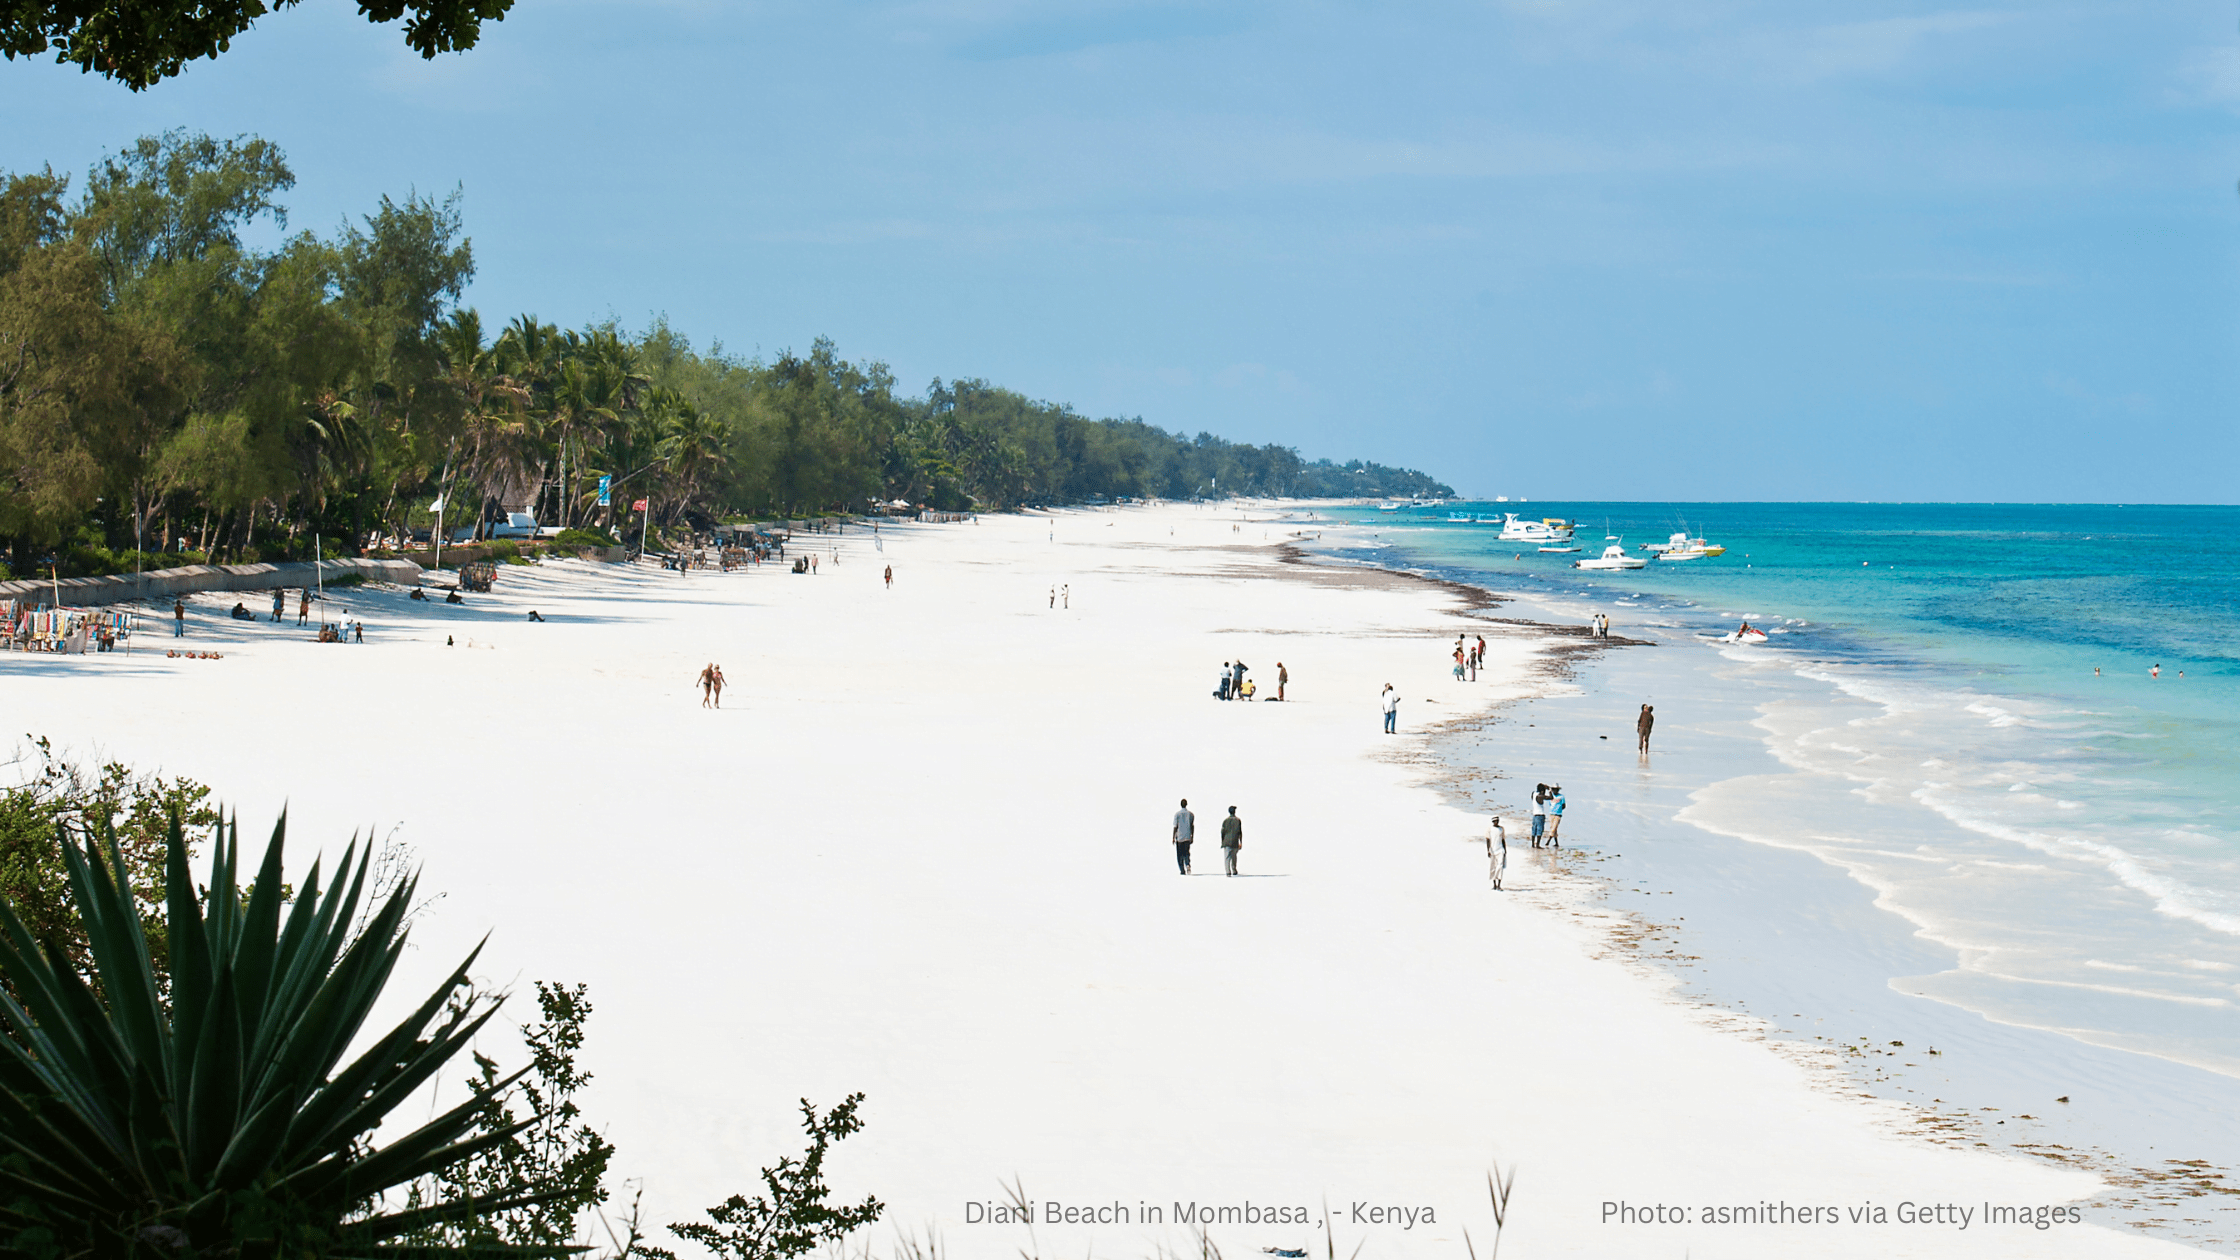 Diani Beach in Mombasa Kenya